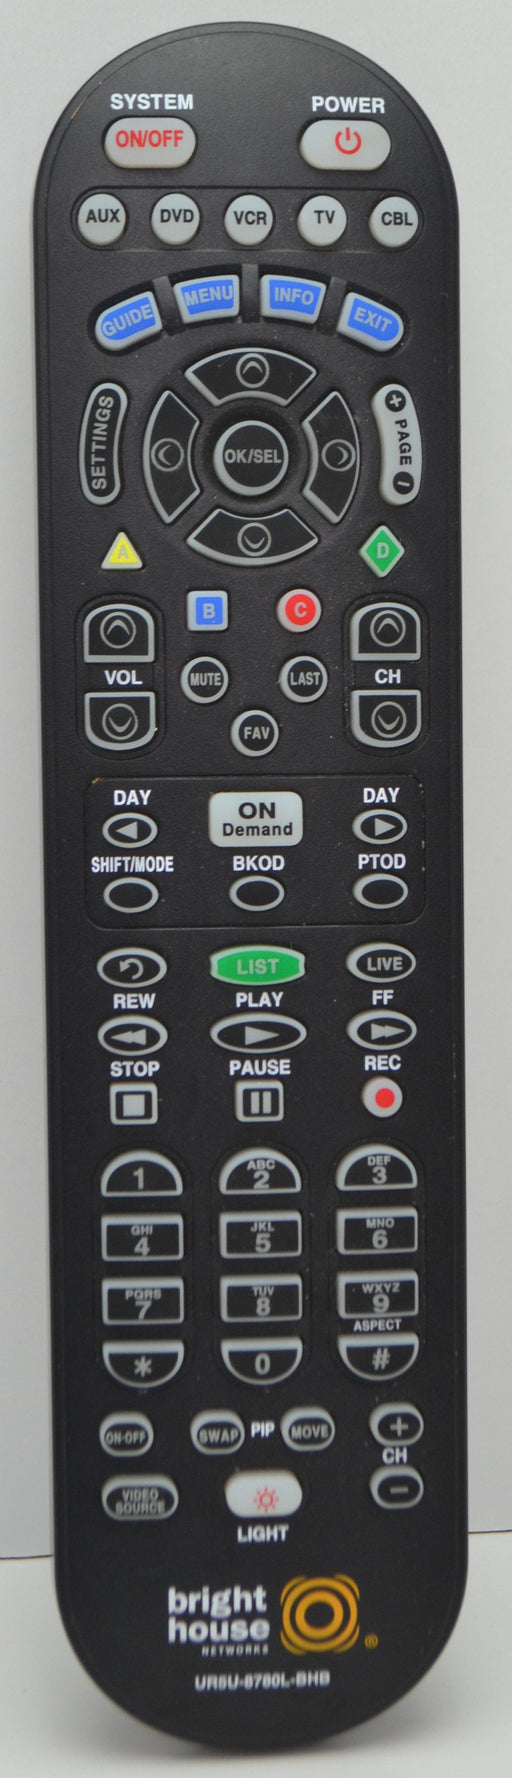 Bright House Networks UR5U-8780L-BHB Universal Remote Control-Remote-SpenCertified-refurbished-vintage-electonics